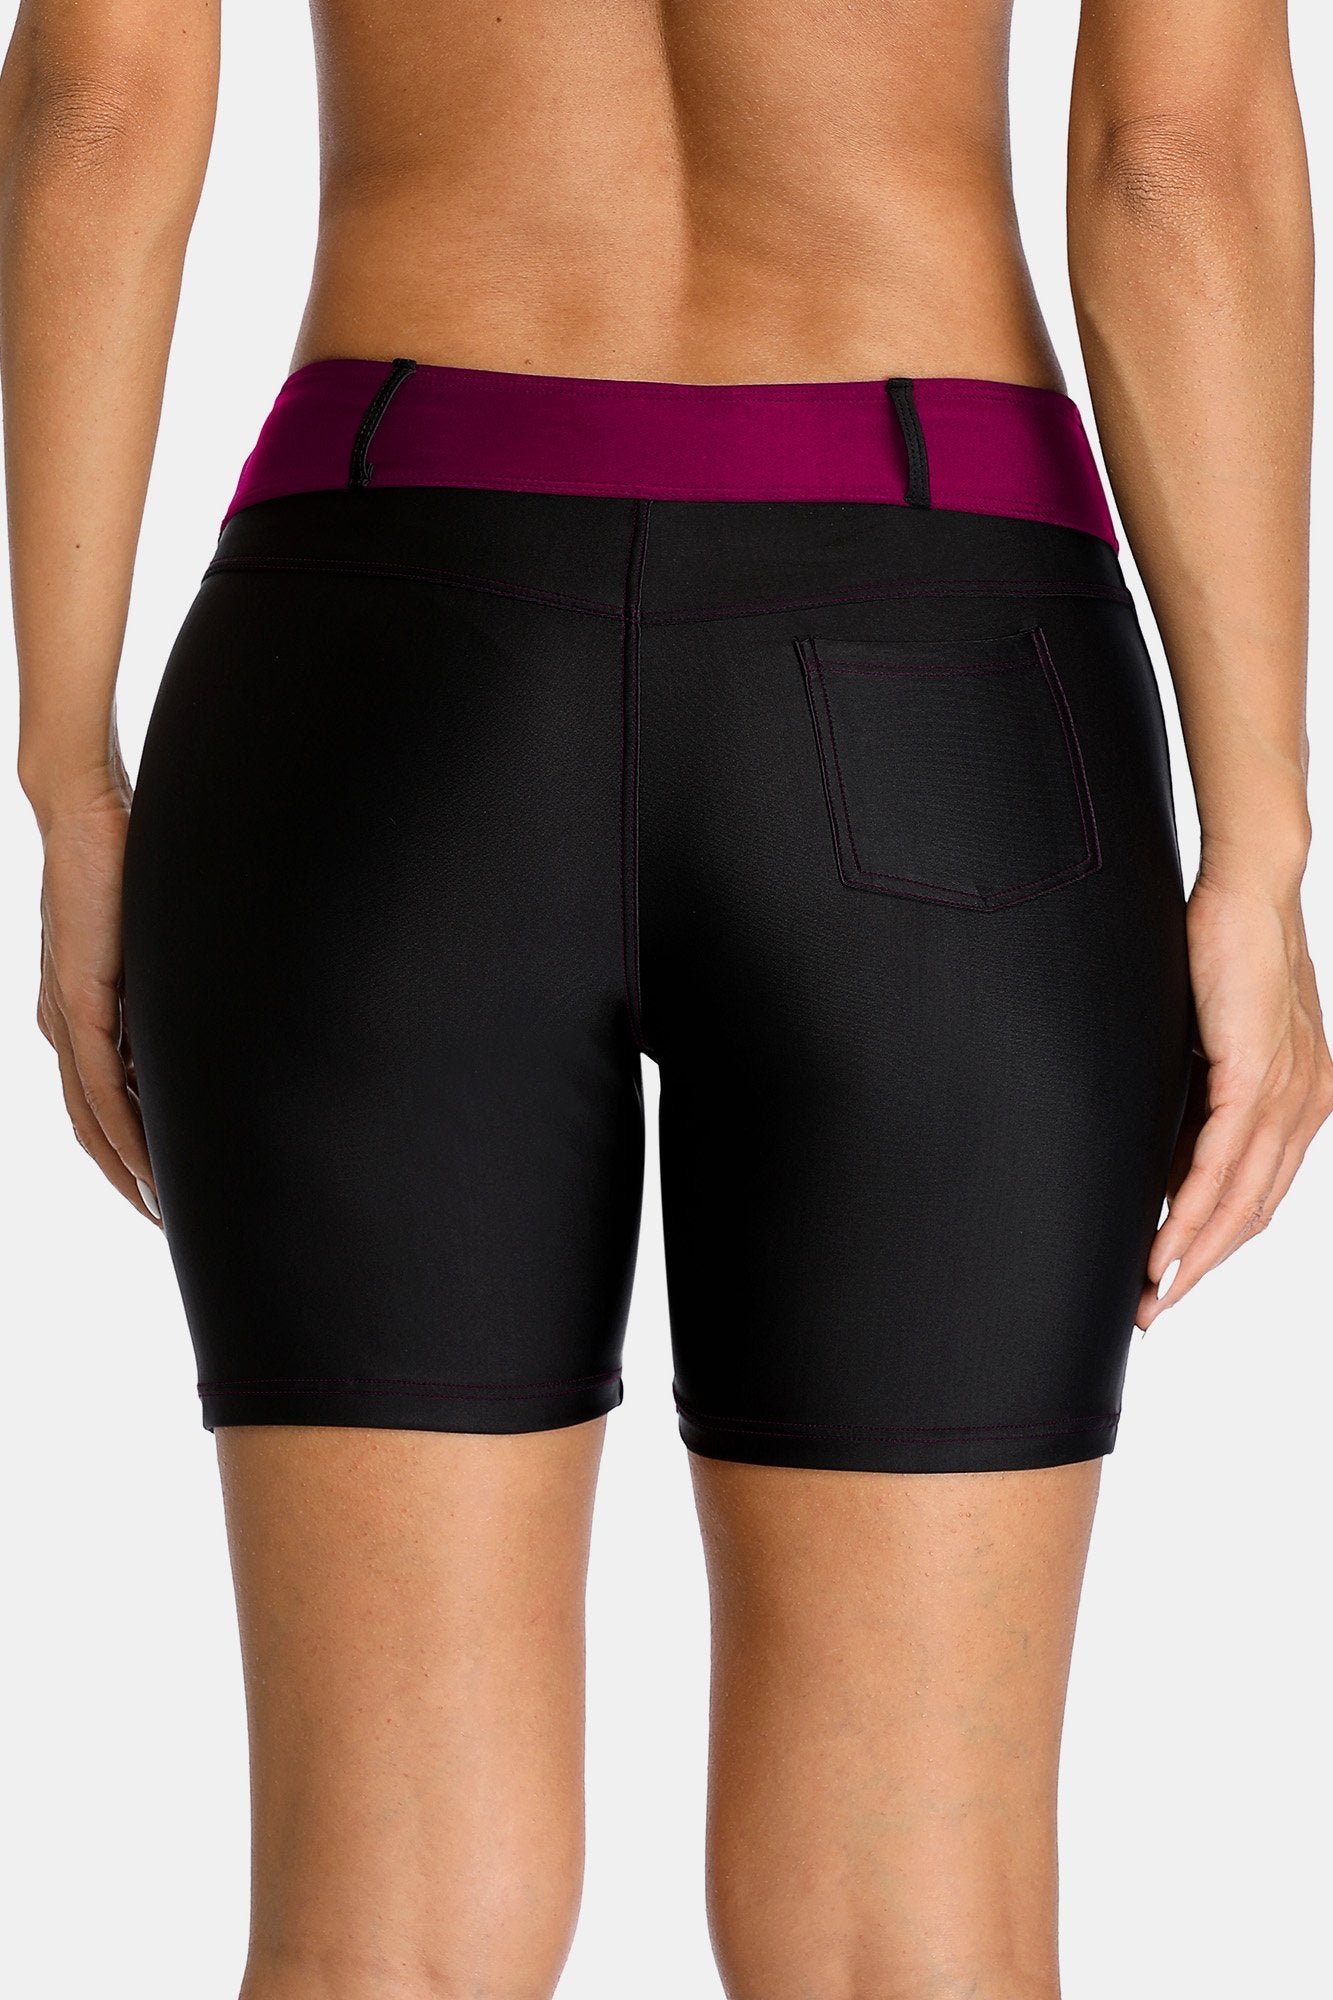 Attraco Wine Belt loops Pocket Women Swim Shorts-Attraco | Fashion Outdoor Clothing